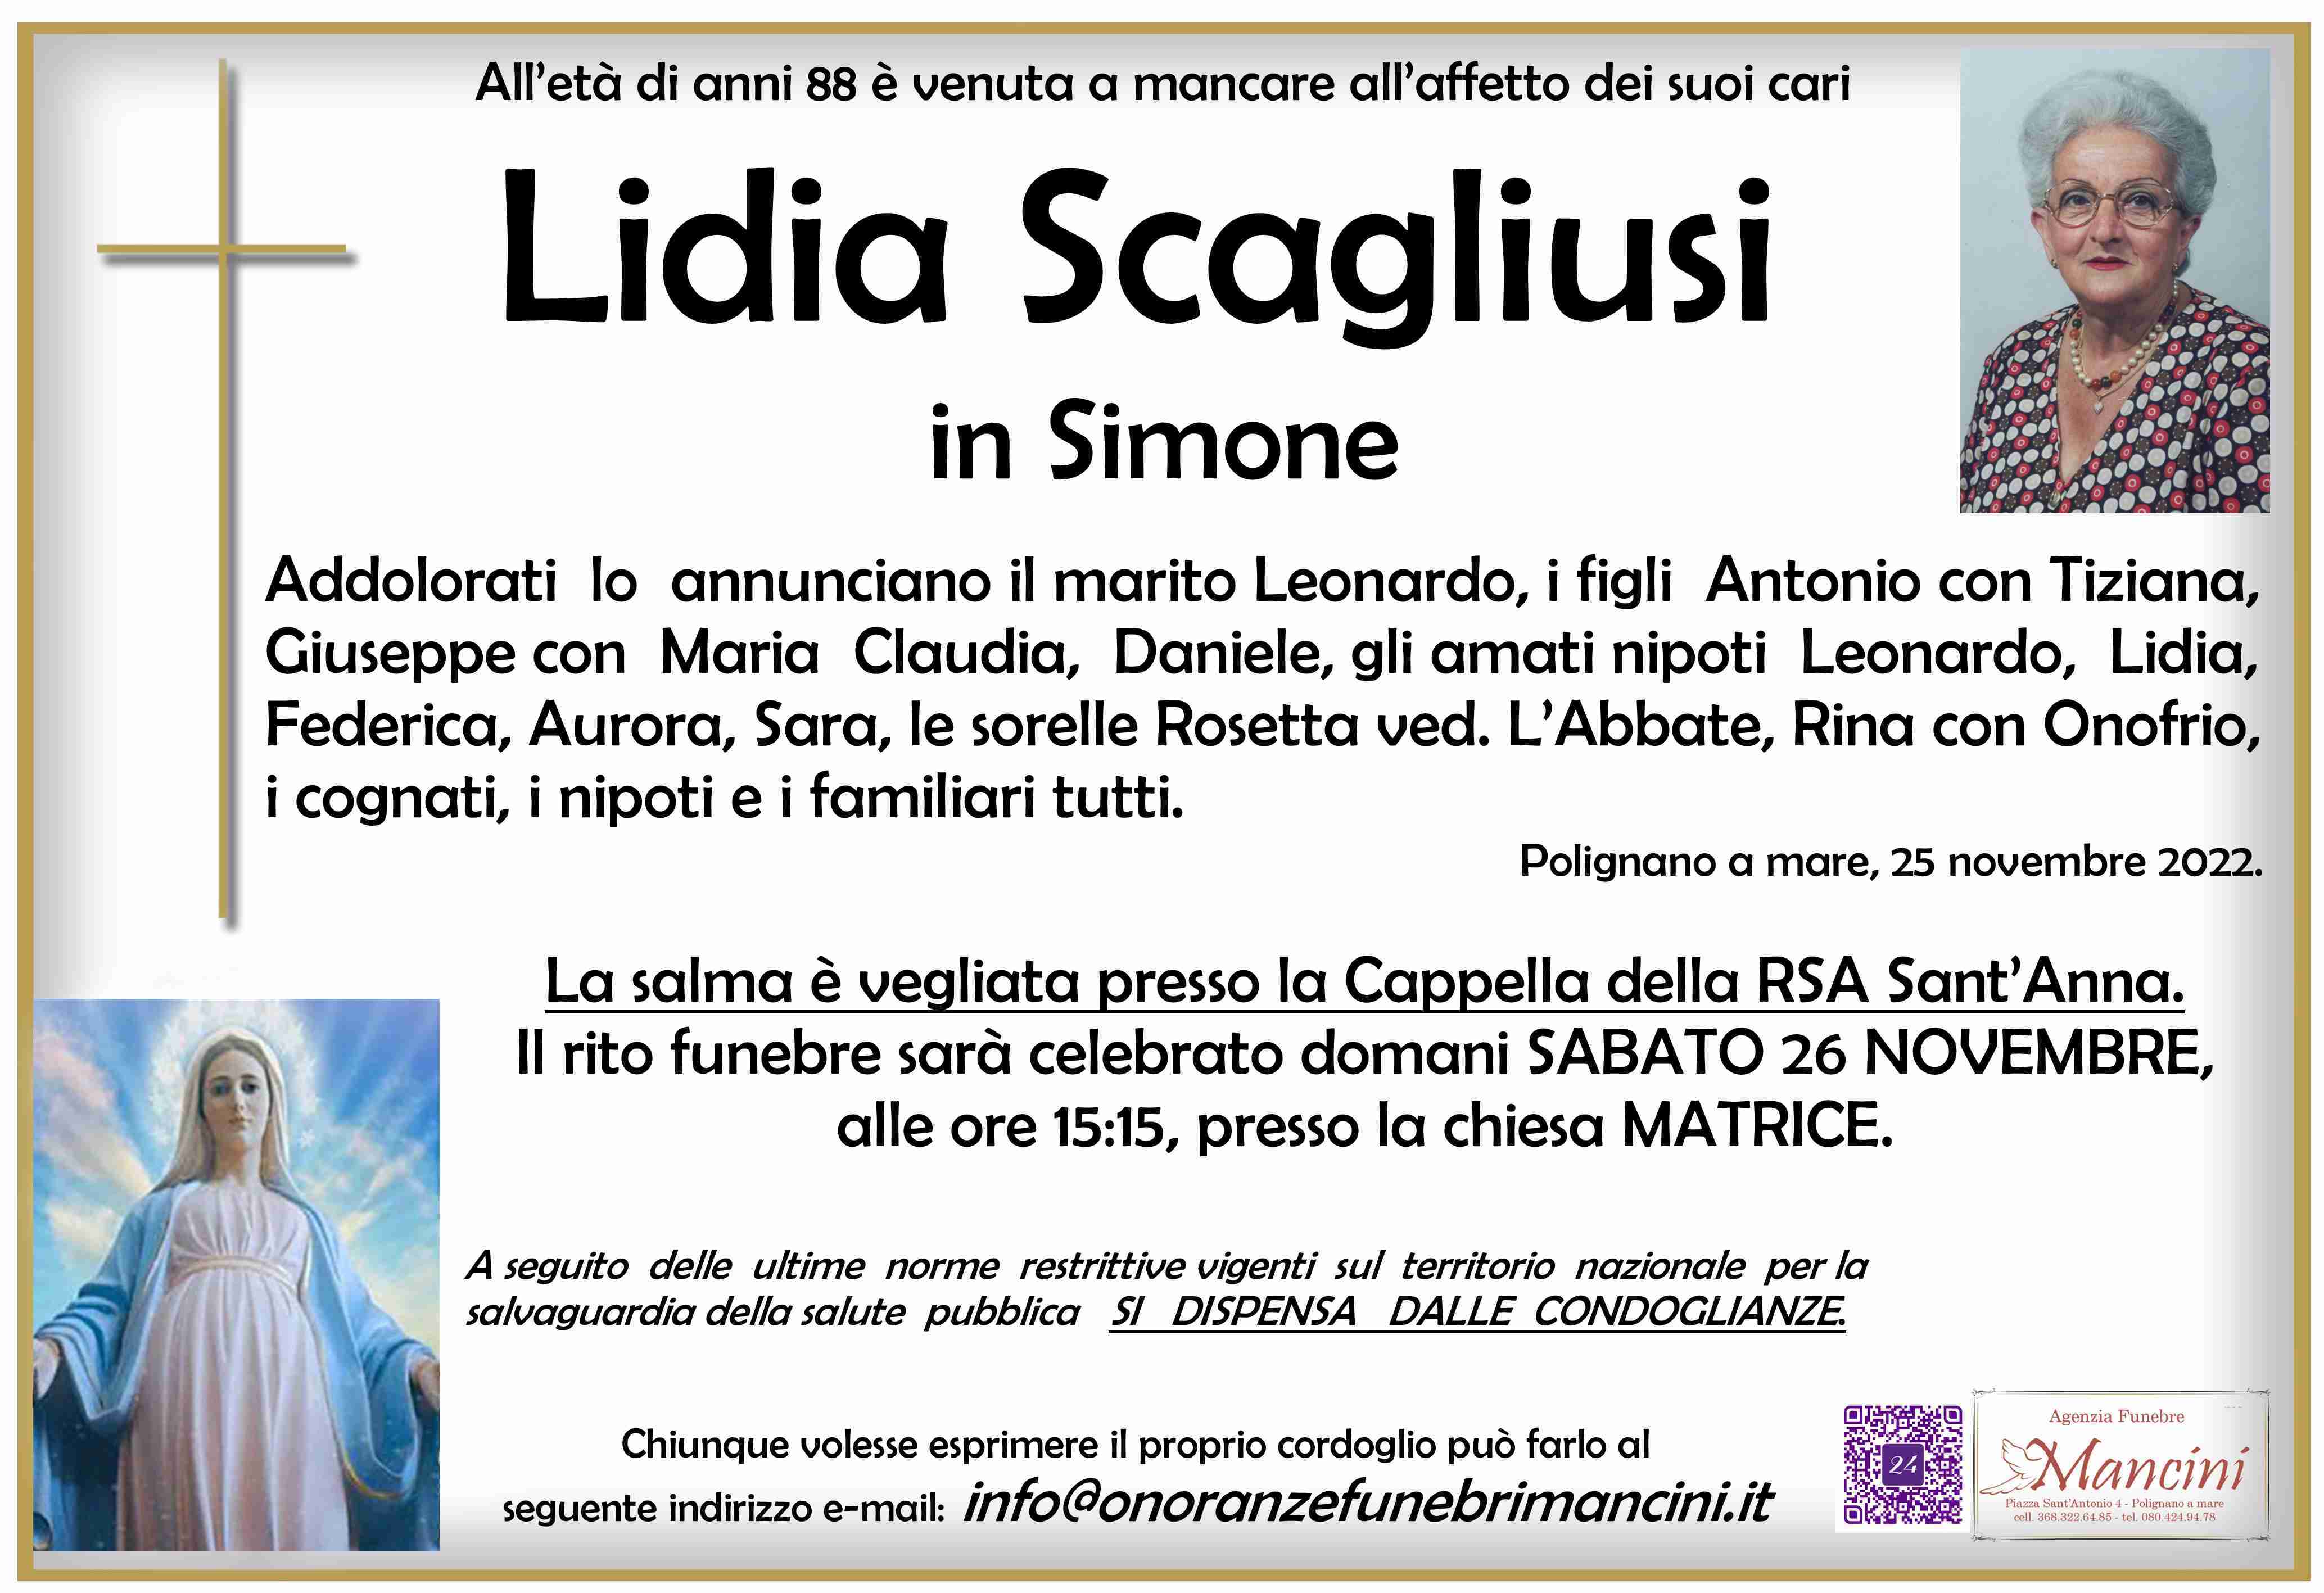 Lidia Scagliusi